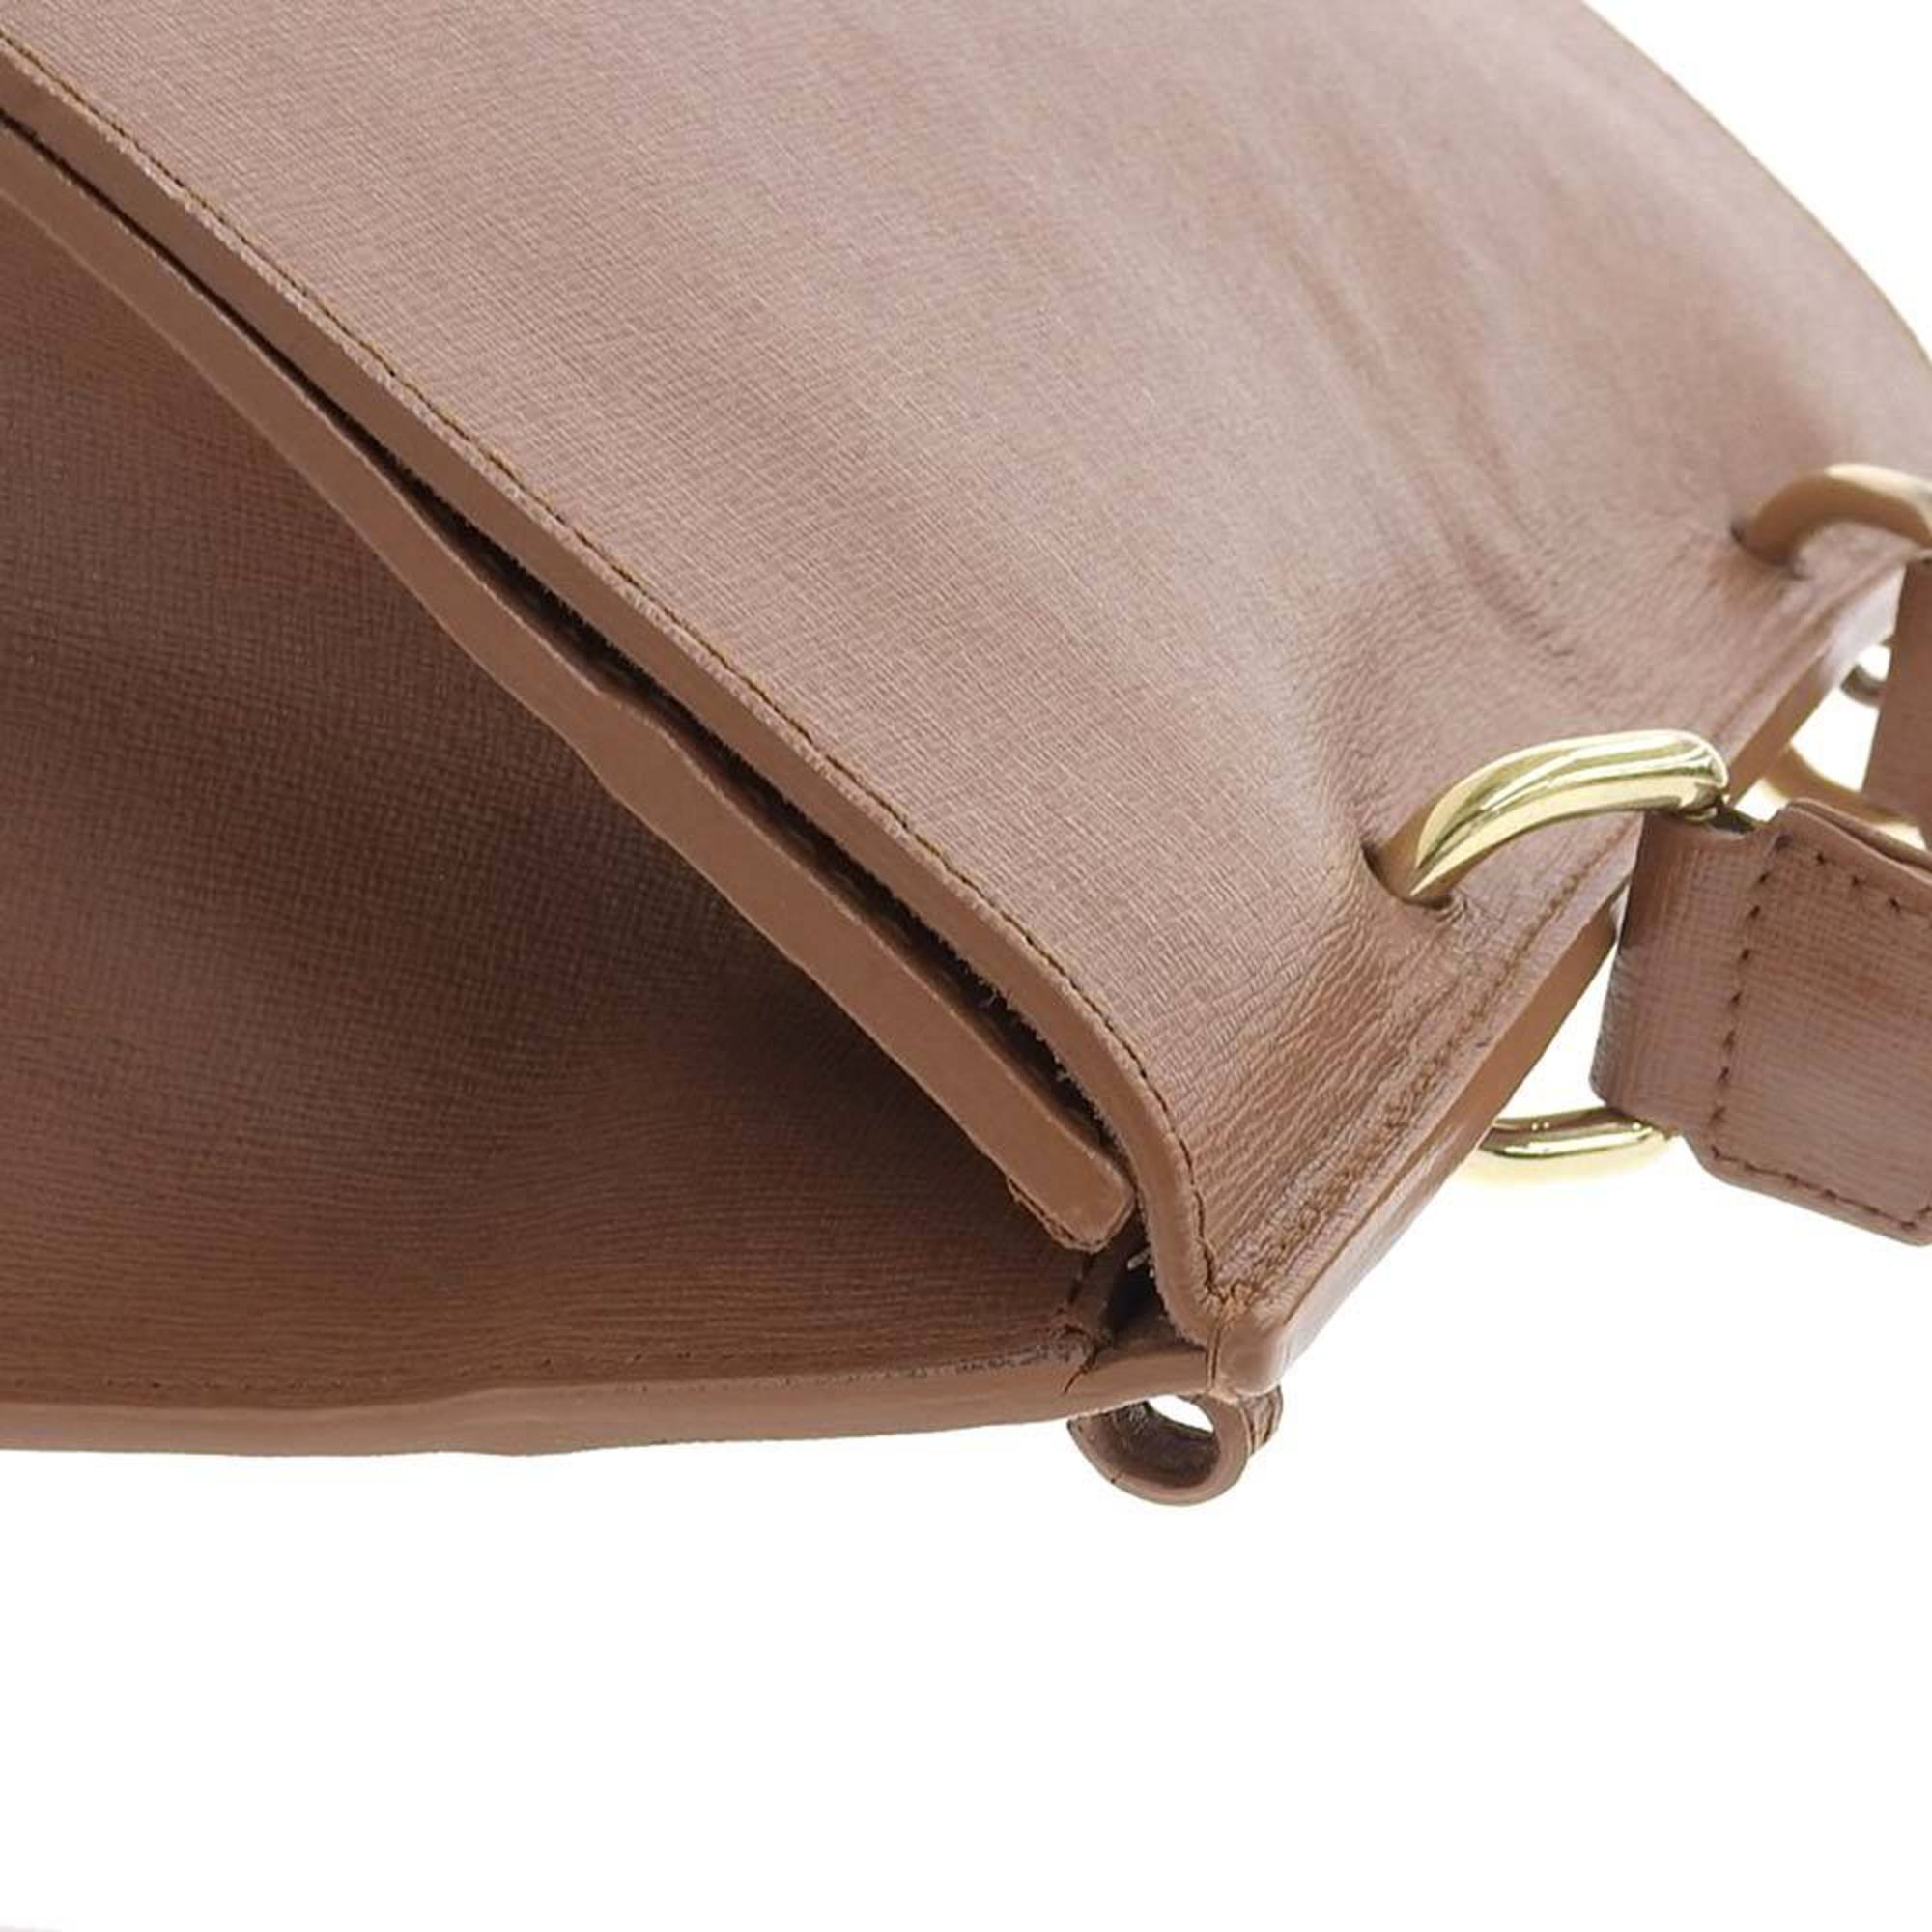 Furla FURLA Julia M Top Handle 2WAY Bag Handbag One Shoulder Leather Brown F6801